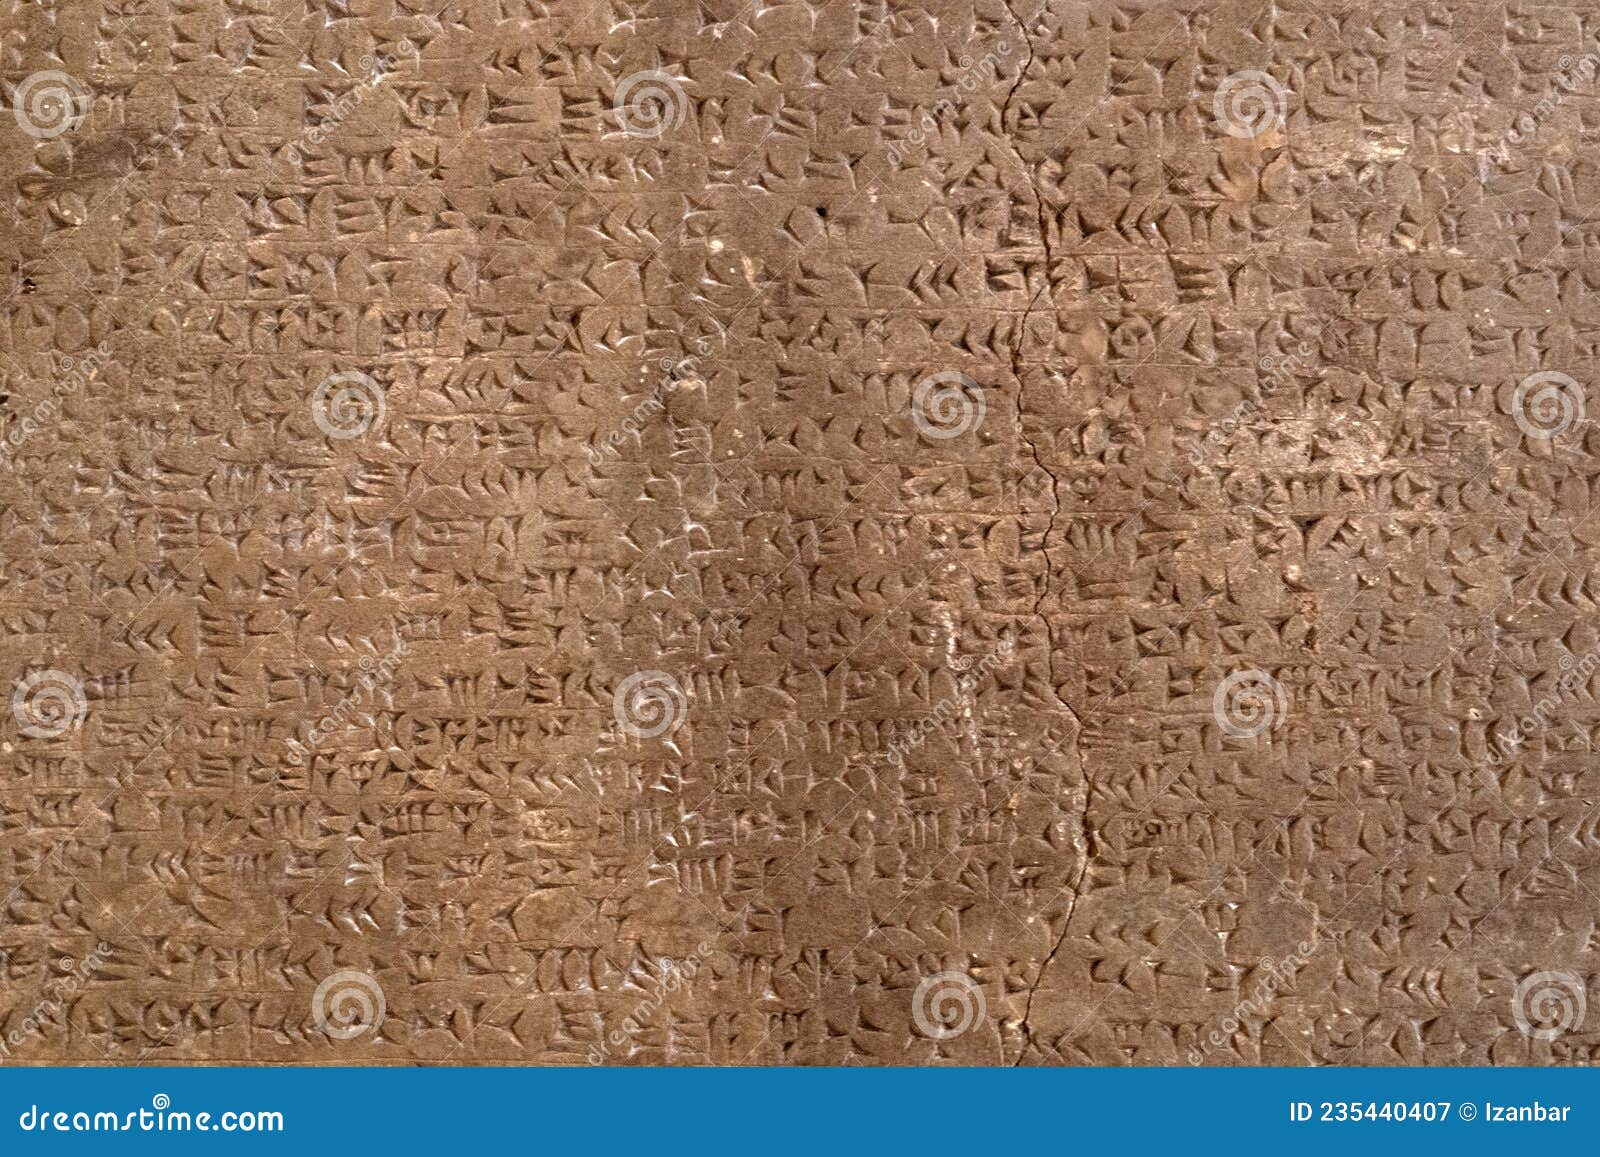 cuneiform writing mesopotamia assyria tablet